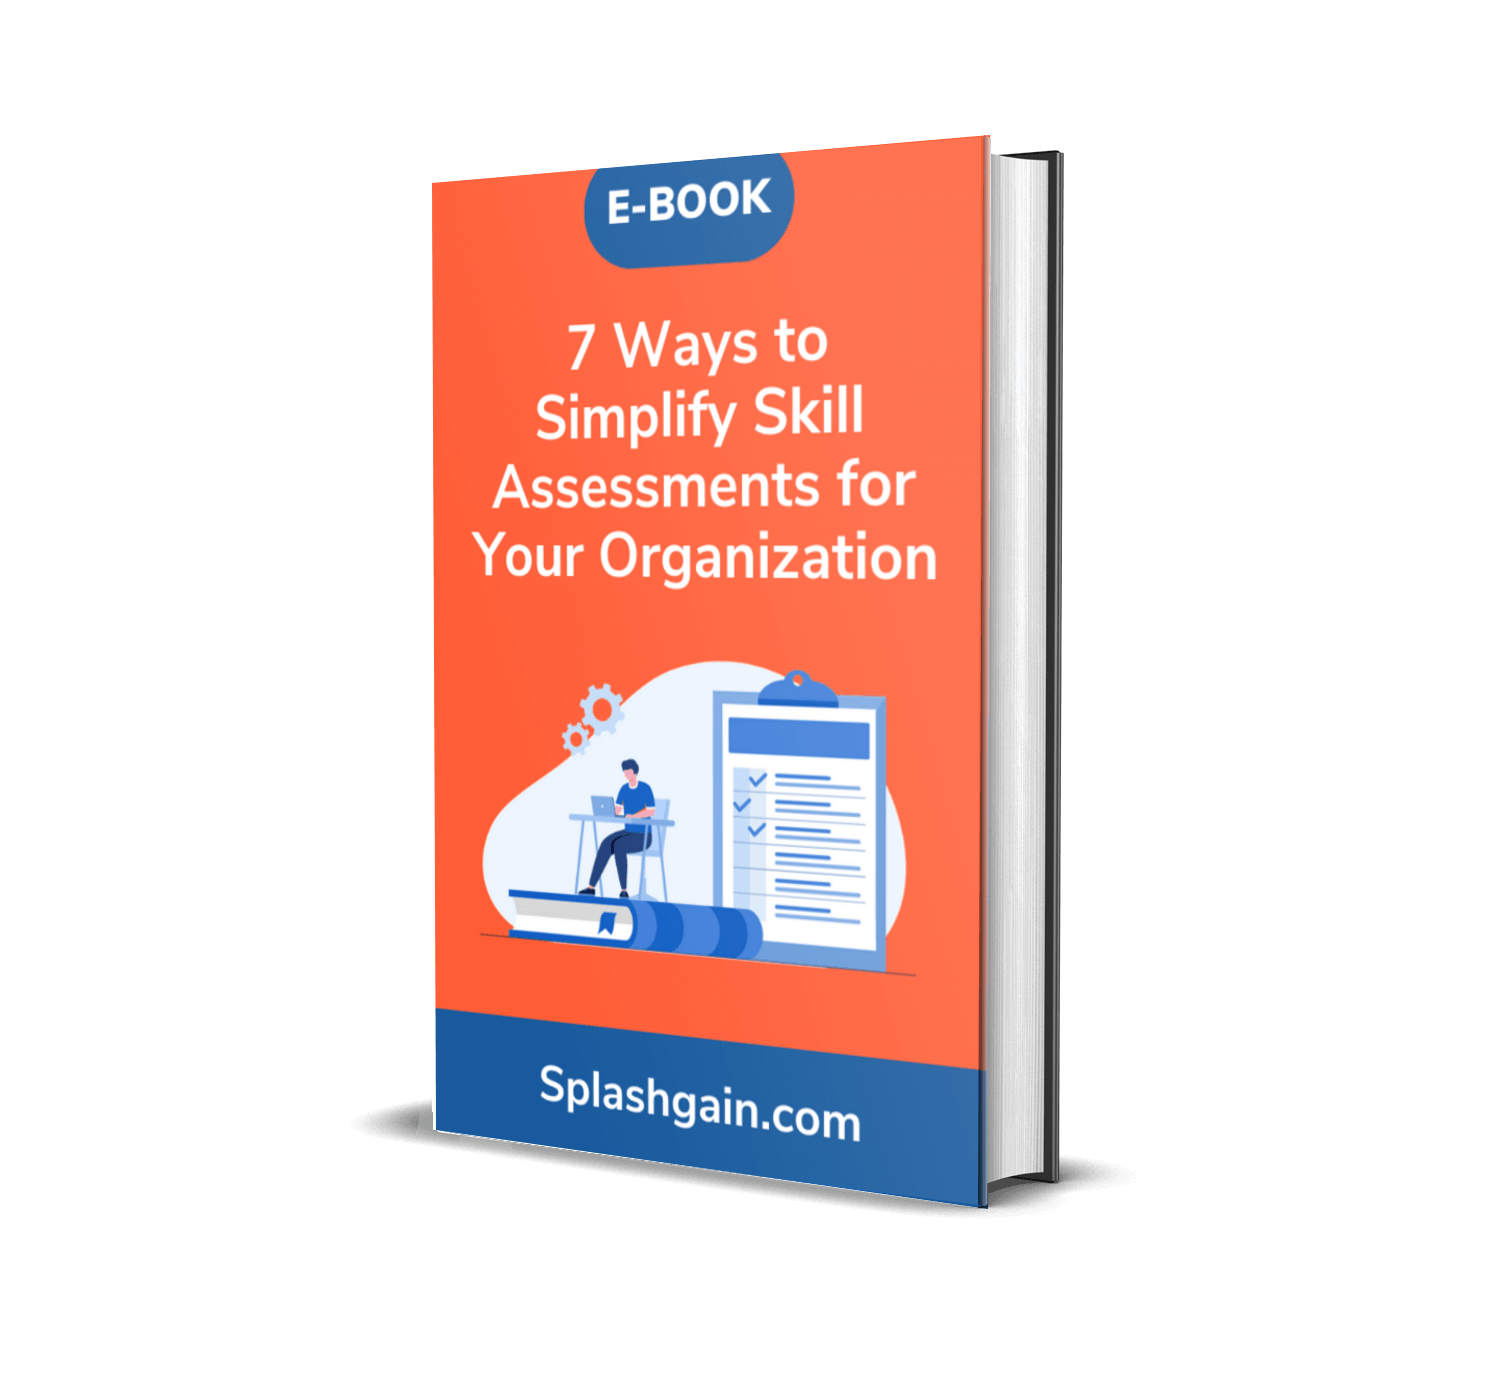 7 Ways to Simplify Skill Assessments for Your Organization ebook splashgain